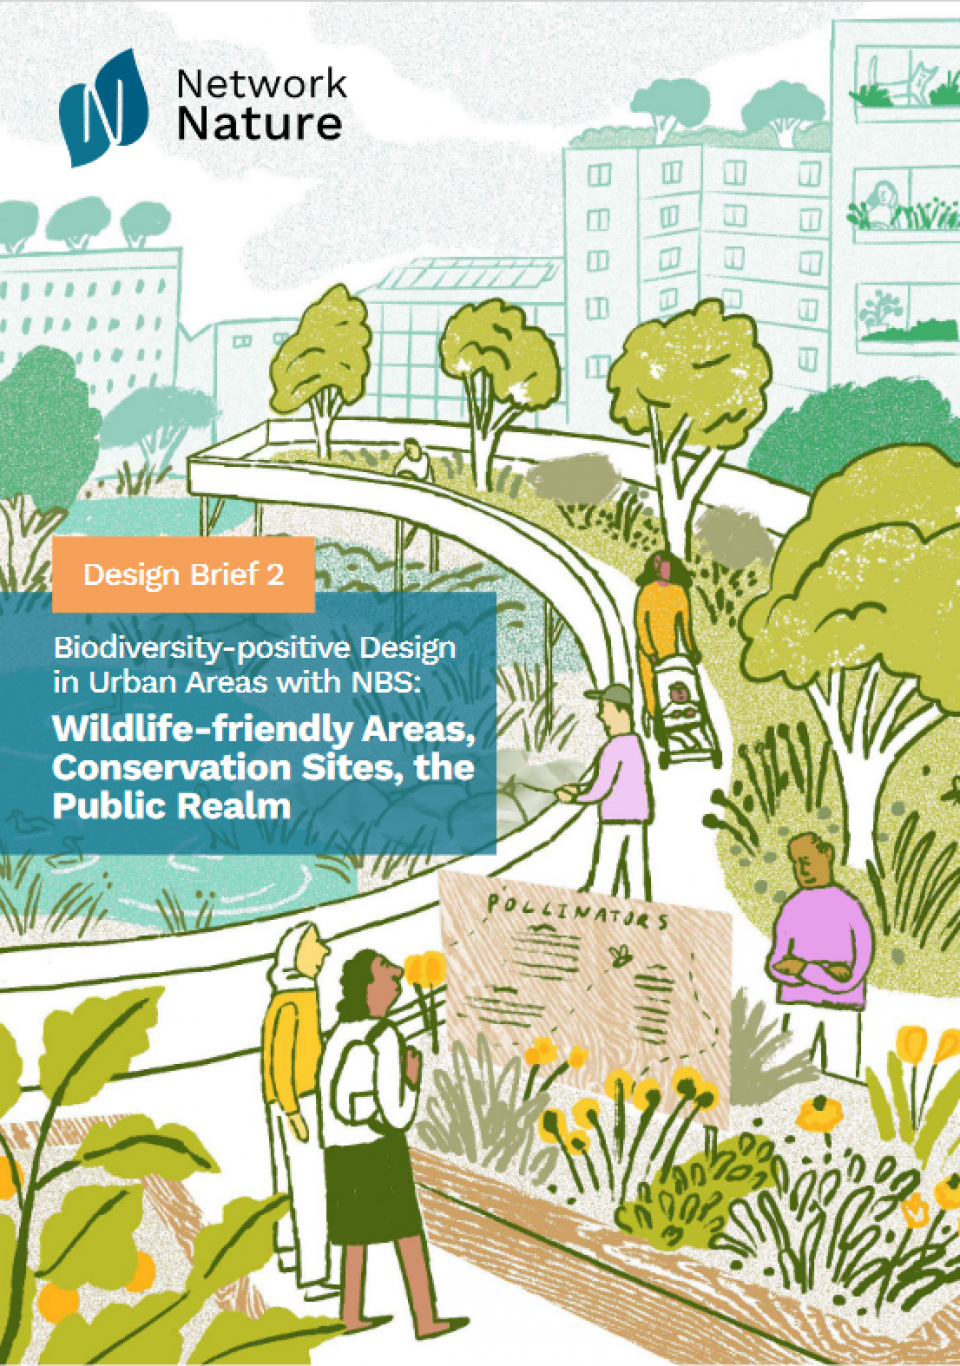 Design Brief 1- Biodiversity-positive Design in Urban Areas with